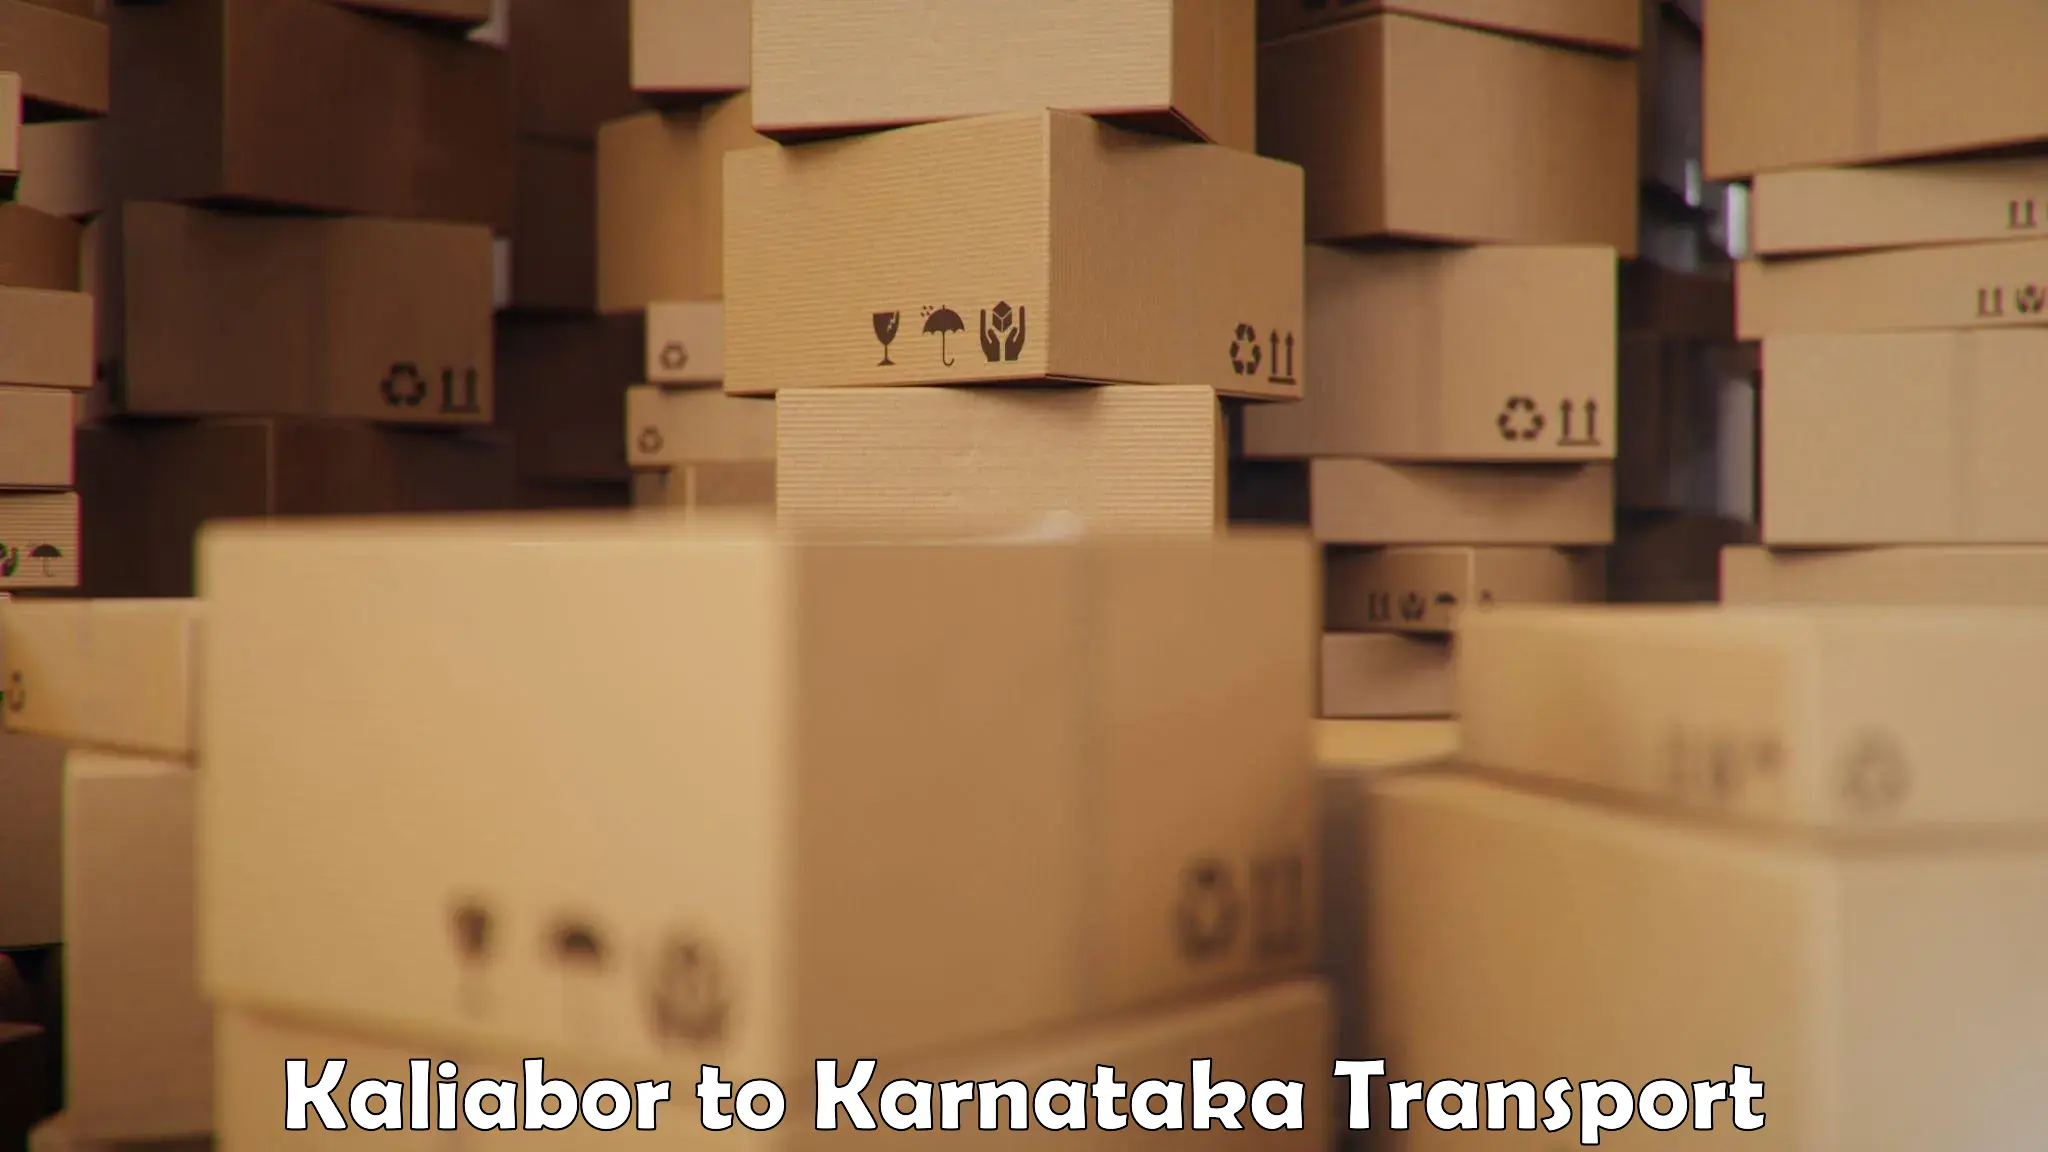 Container transport service Kaliabor to Mannaekhelli